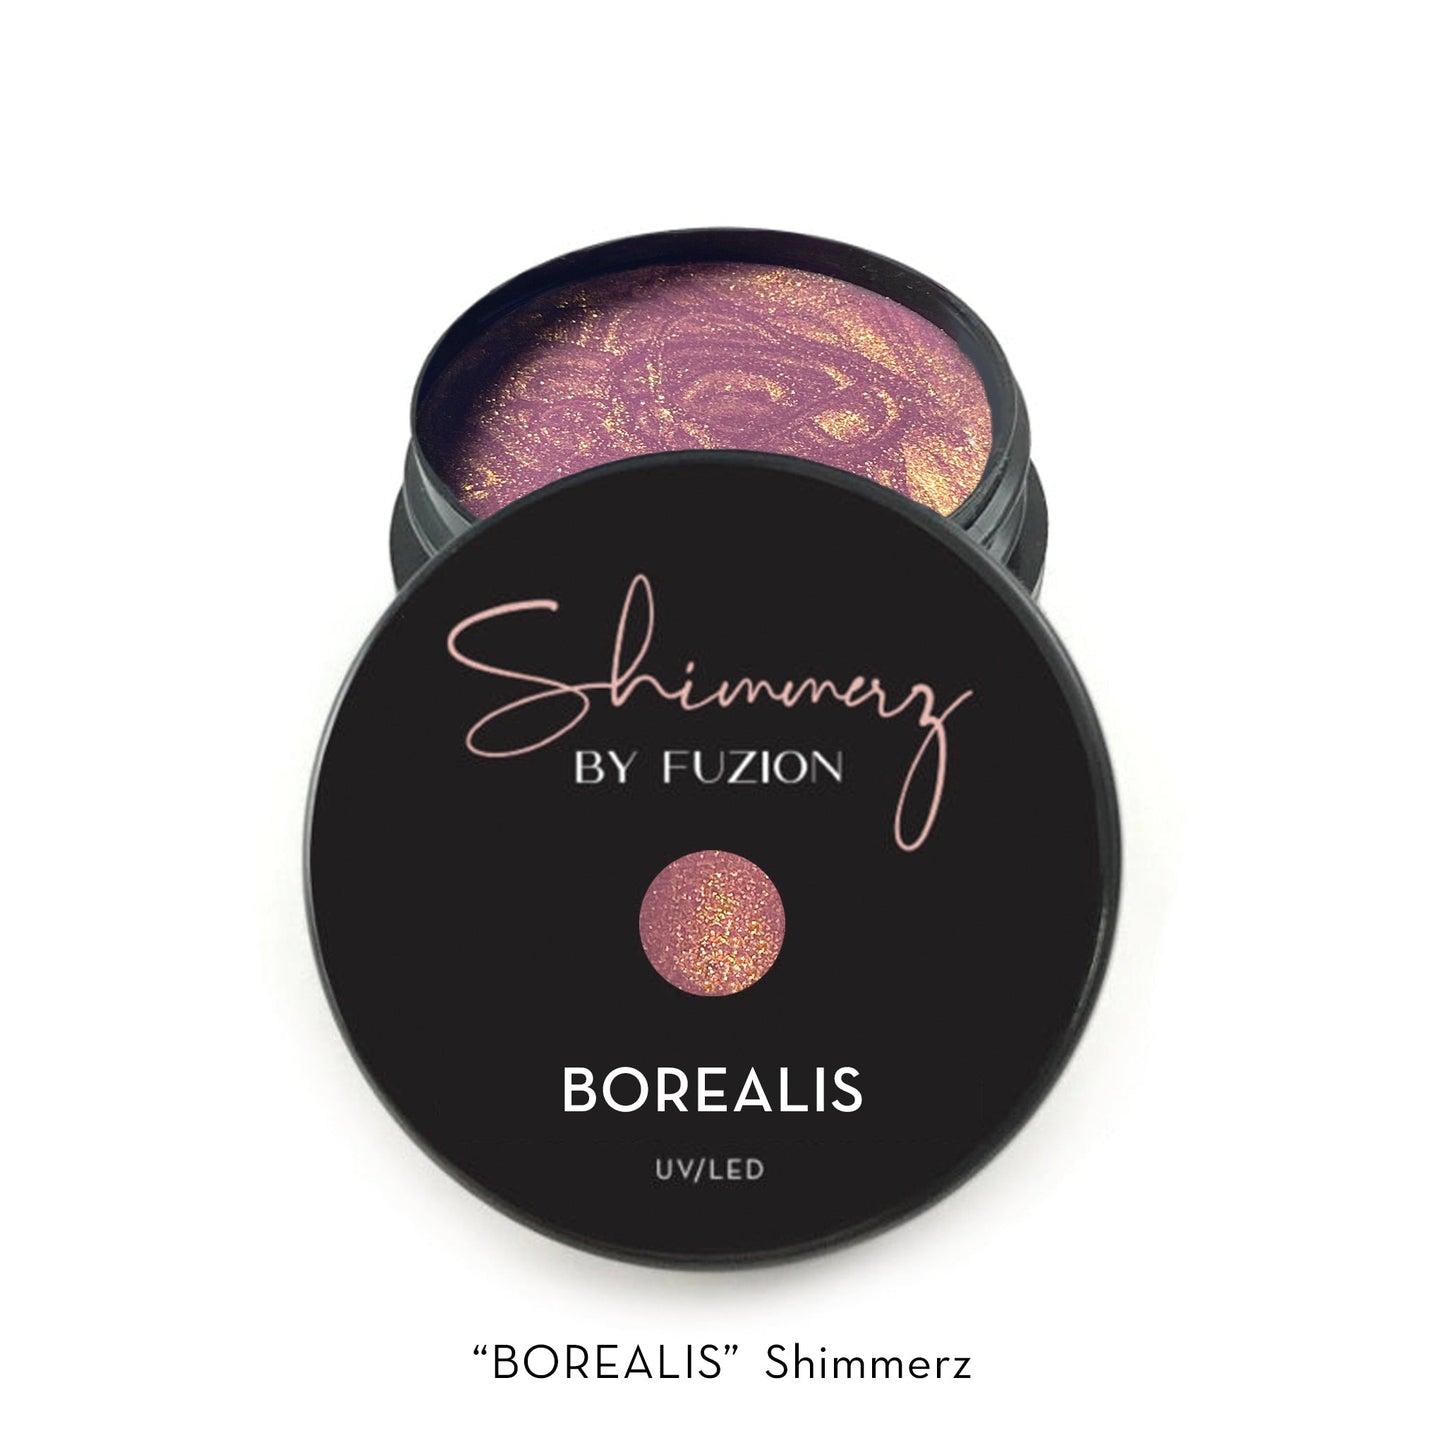 Borealis | Shimmerz 15g